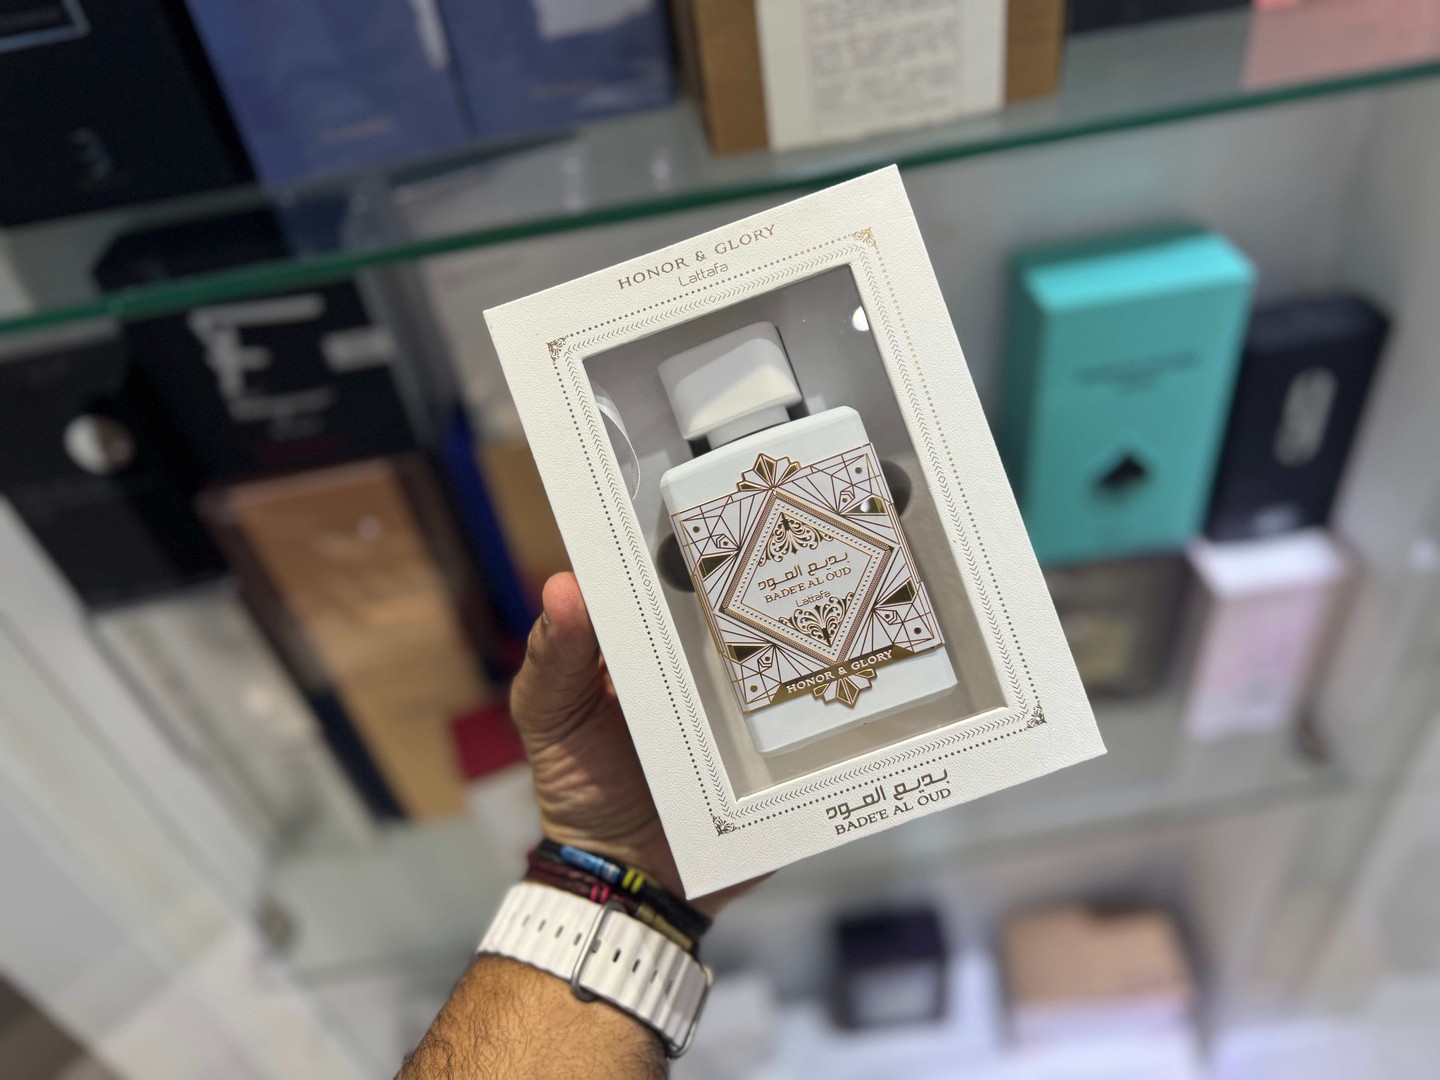 joyas, relojes y accesorios - PERFUME LATTAFA HONOR OF GLORY BADEE AL OUD - NUEVO 100ML RD$ 3,500 NEG